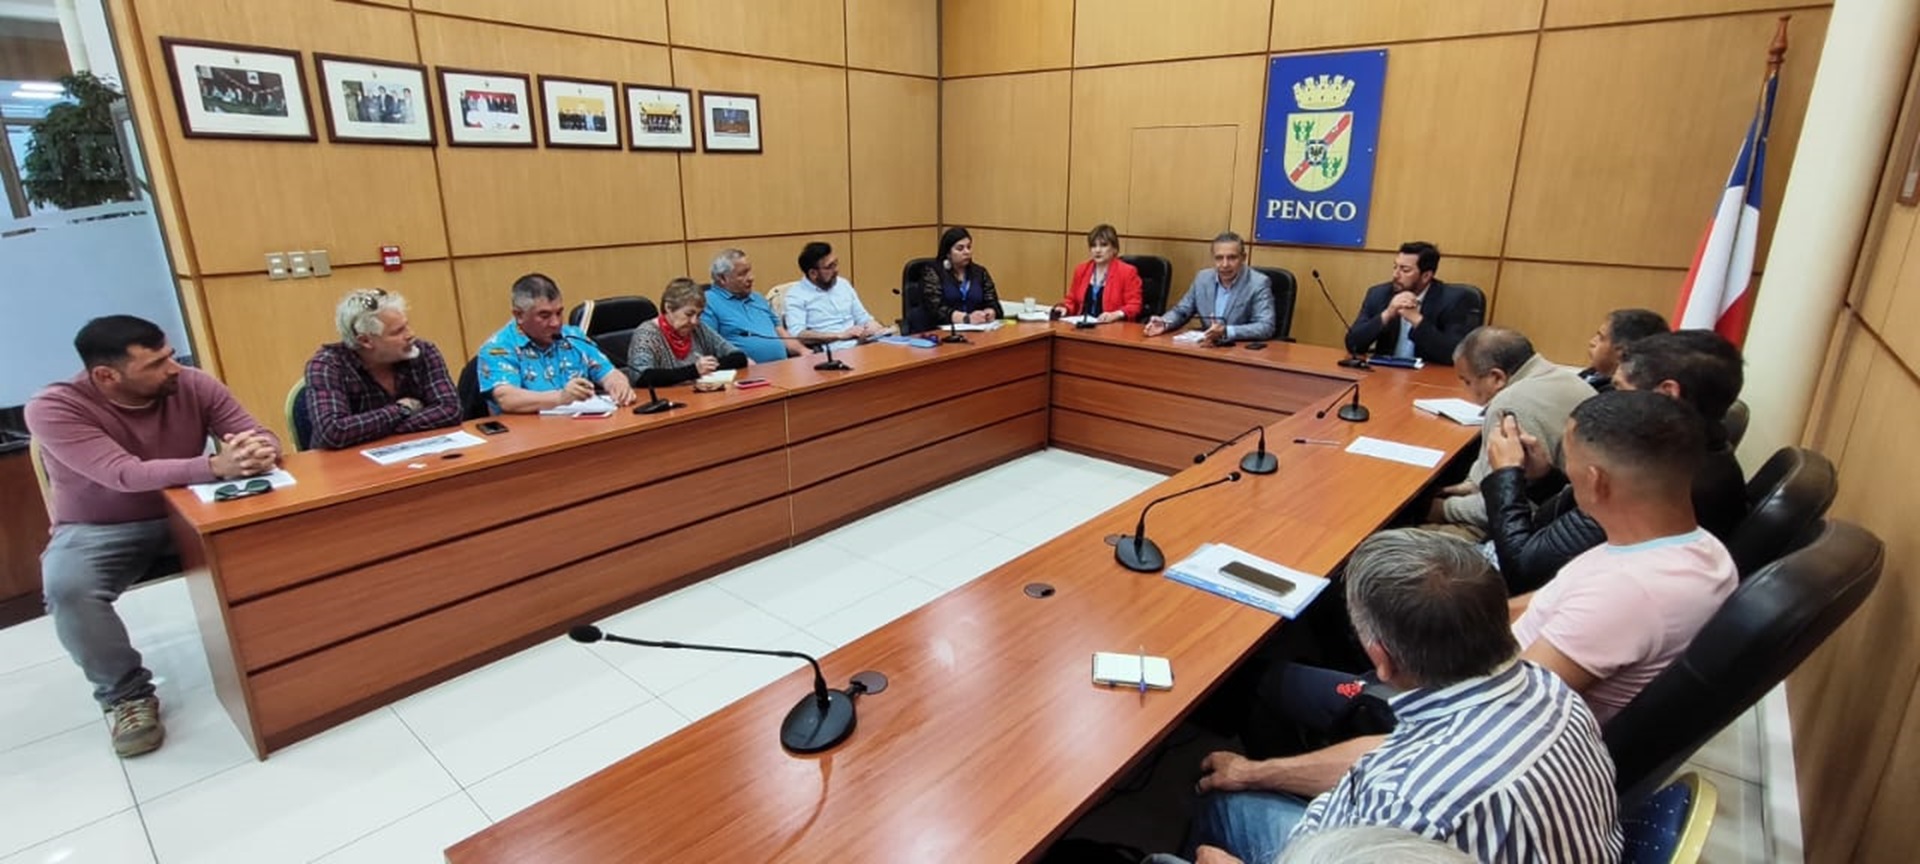 Municipio de Penco, Ferepa Biobío y pescadores reaccionan ante proyecto que afectaría ecosistema marino